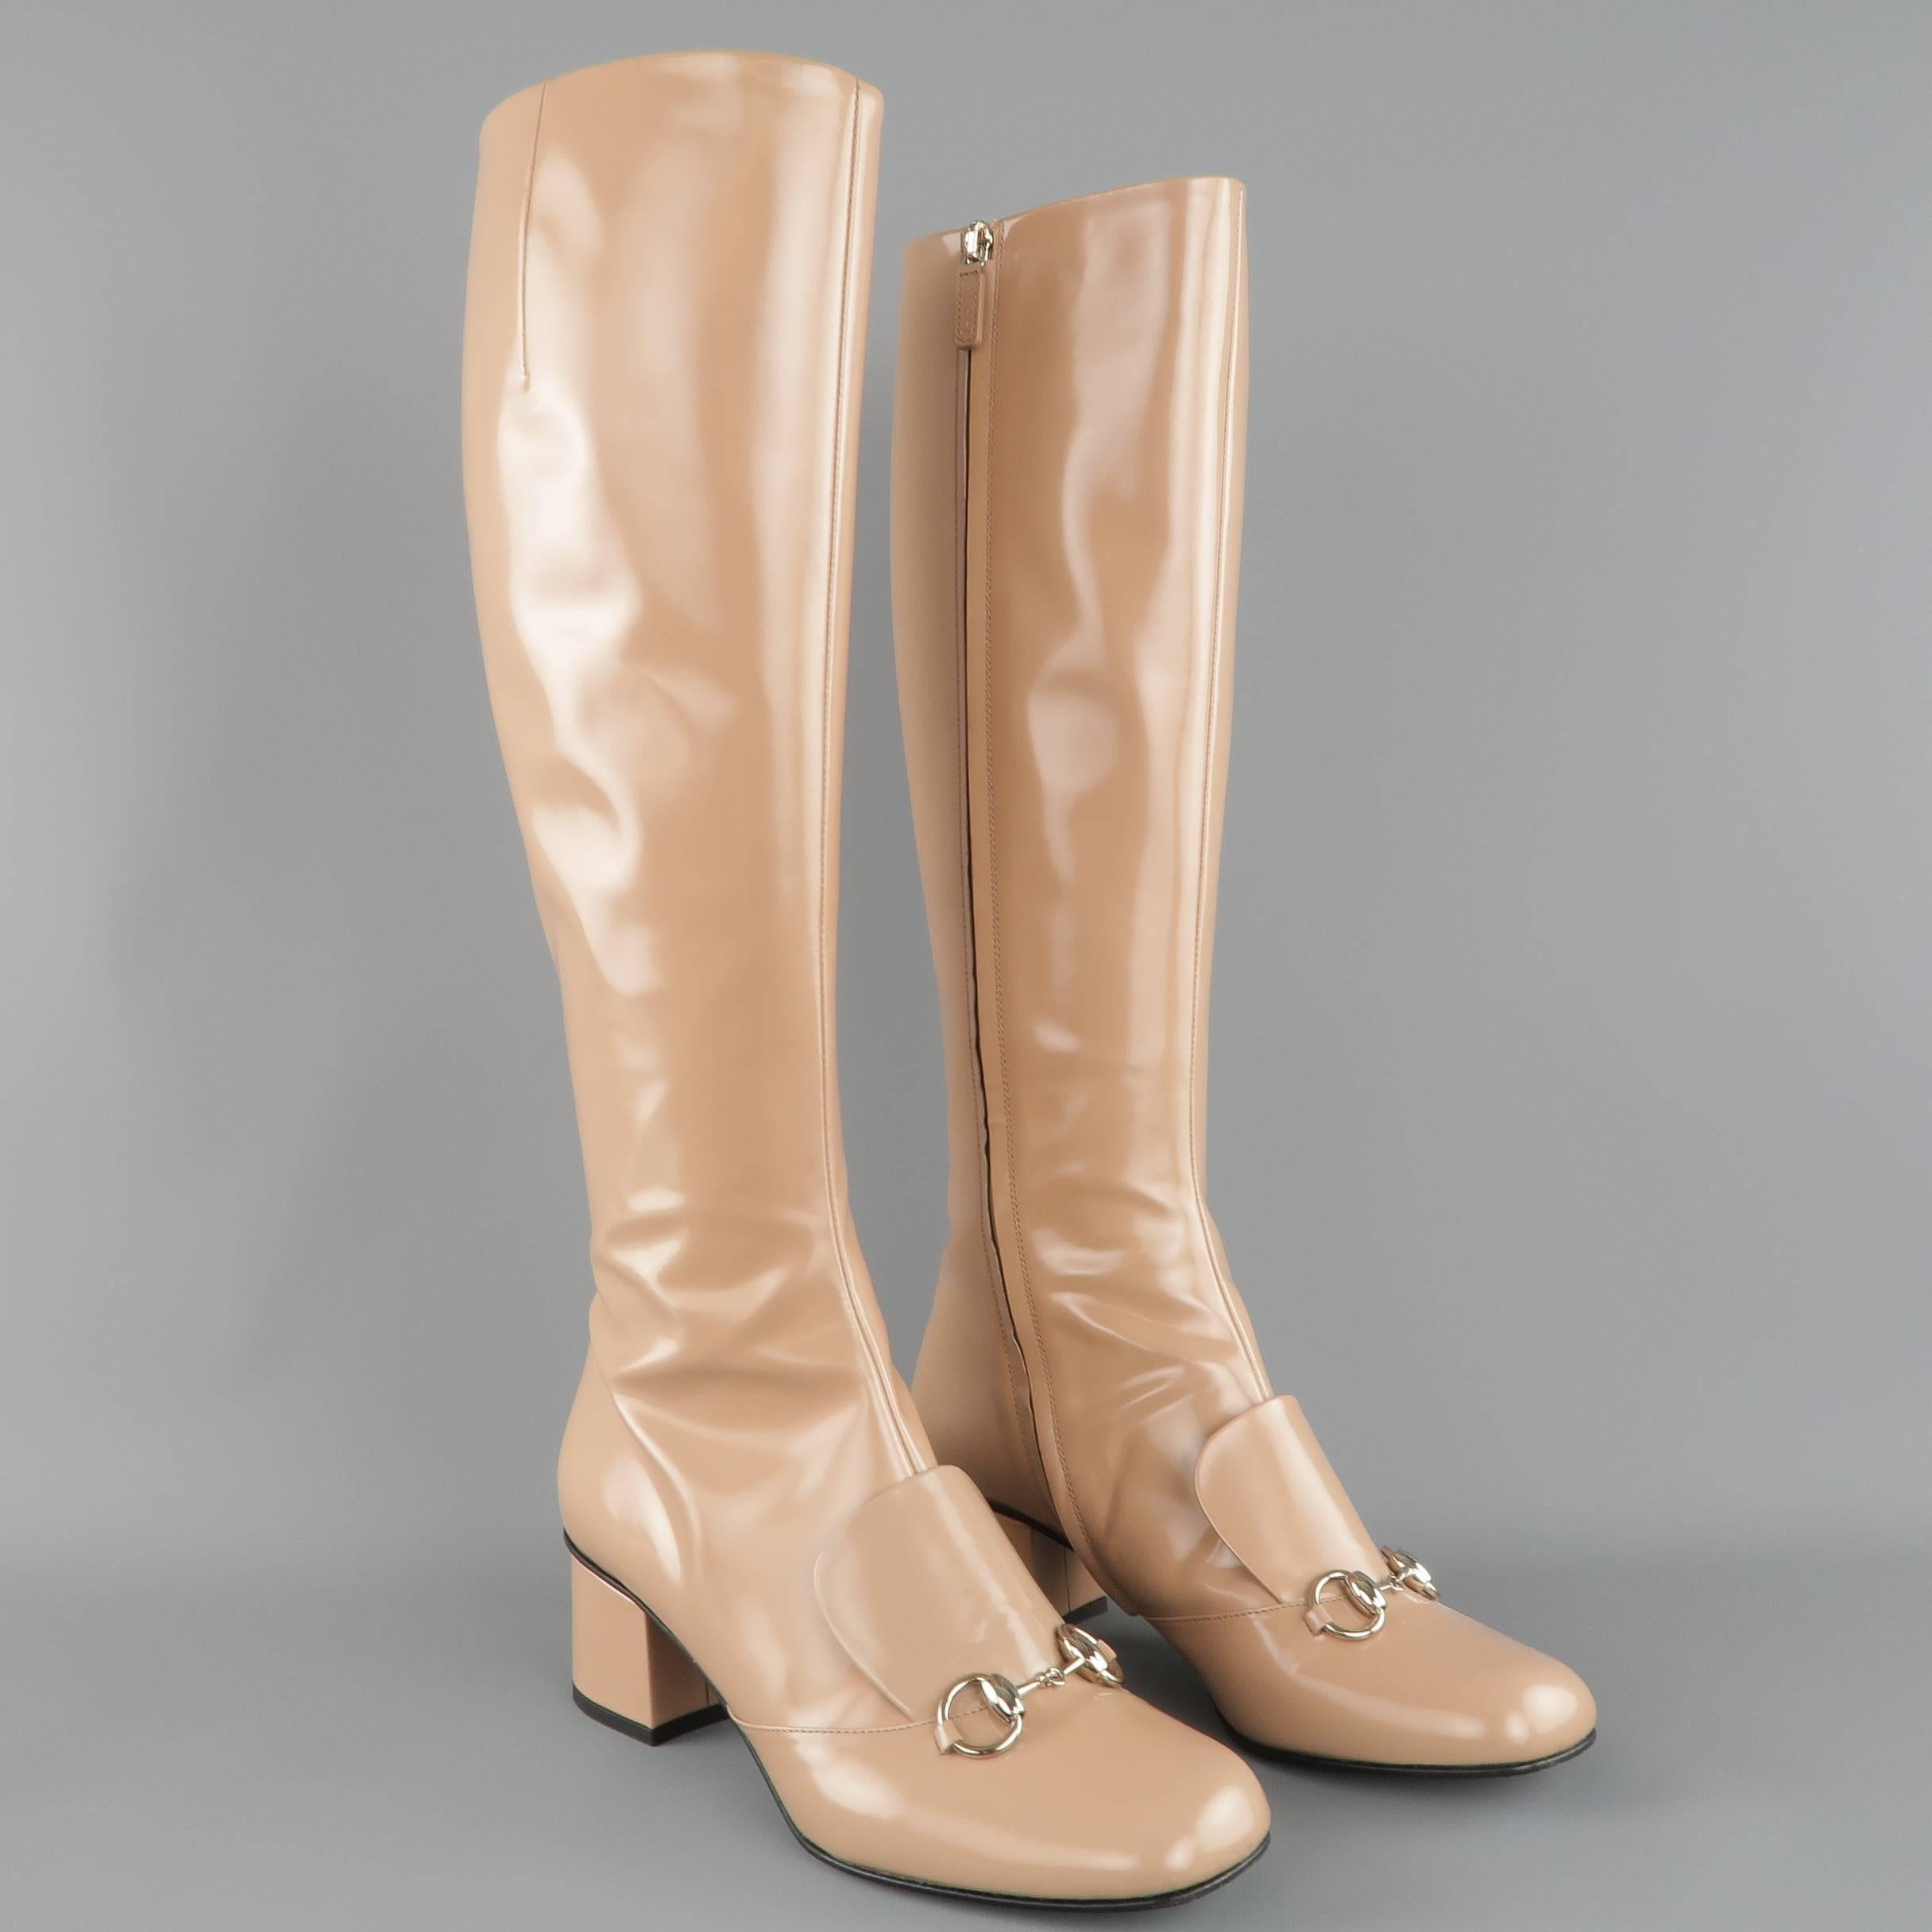 Gucci Lillian - For Sale on 1stDibs | gucci lillian boots, gucci